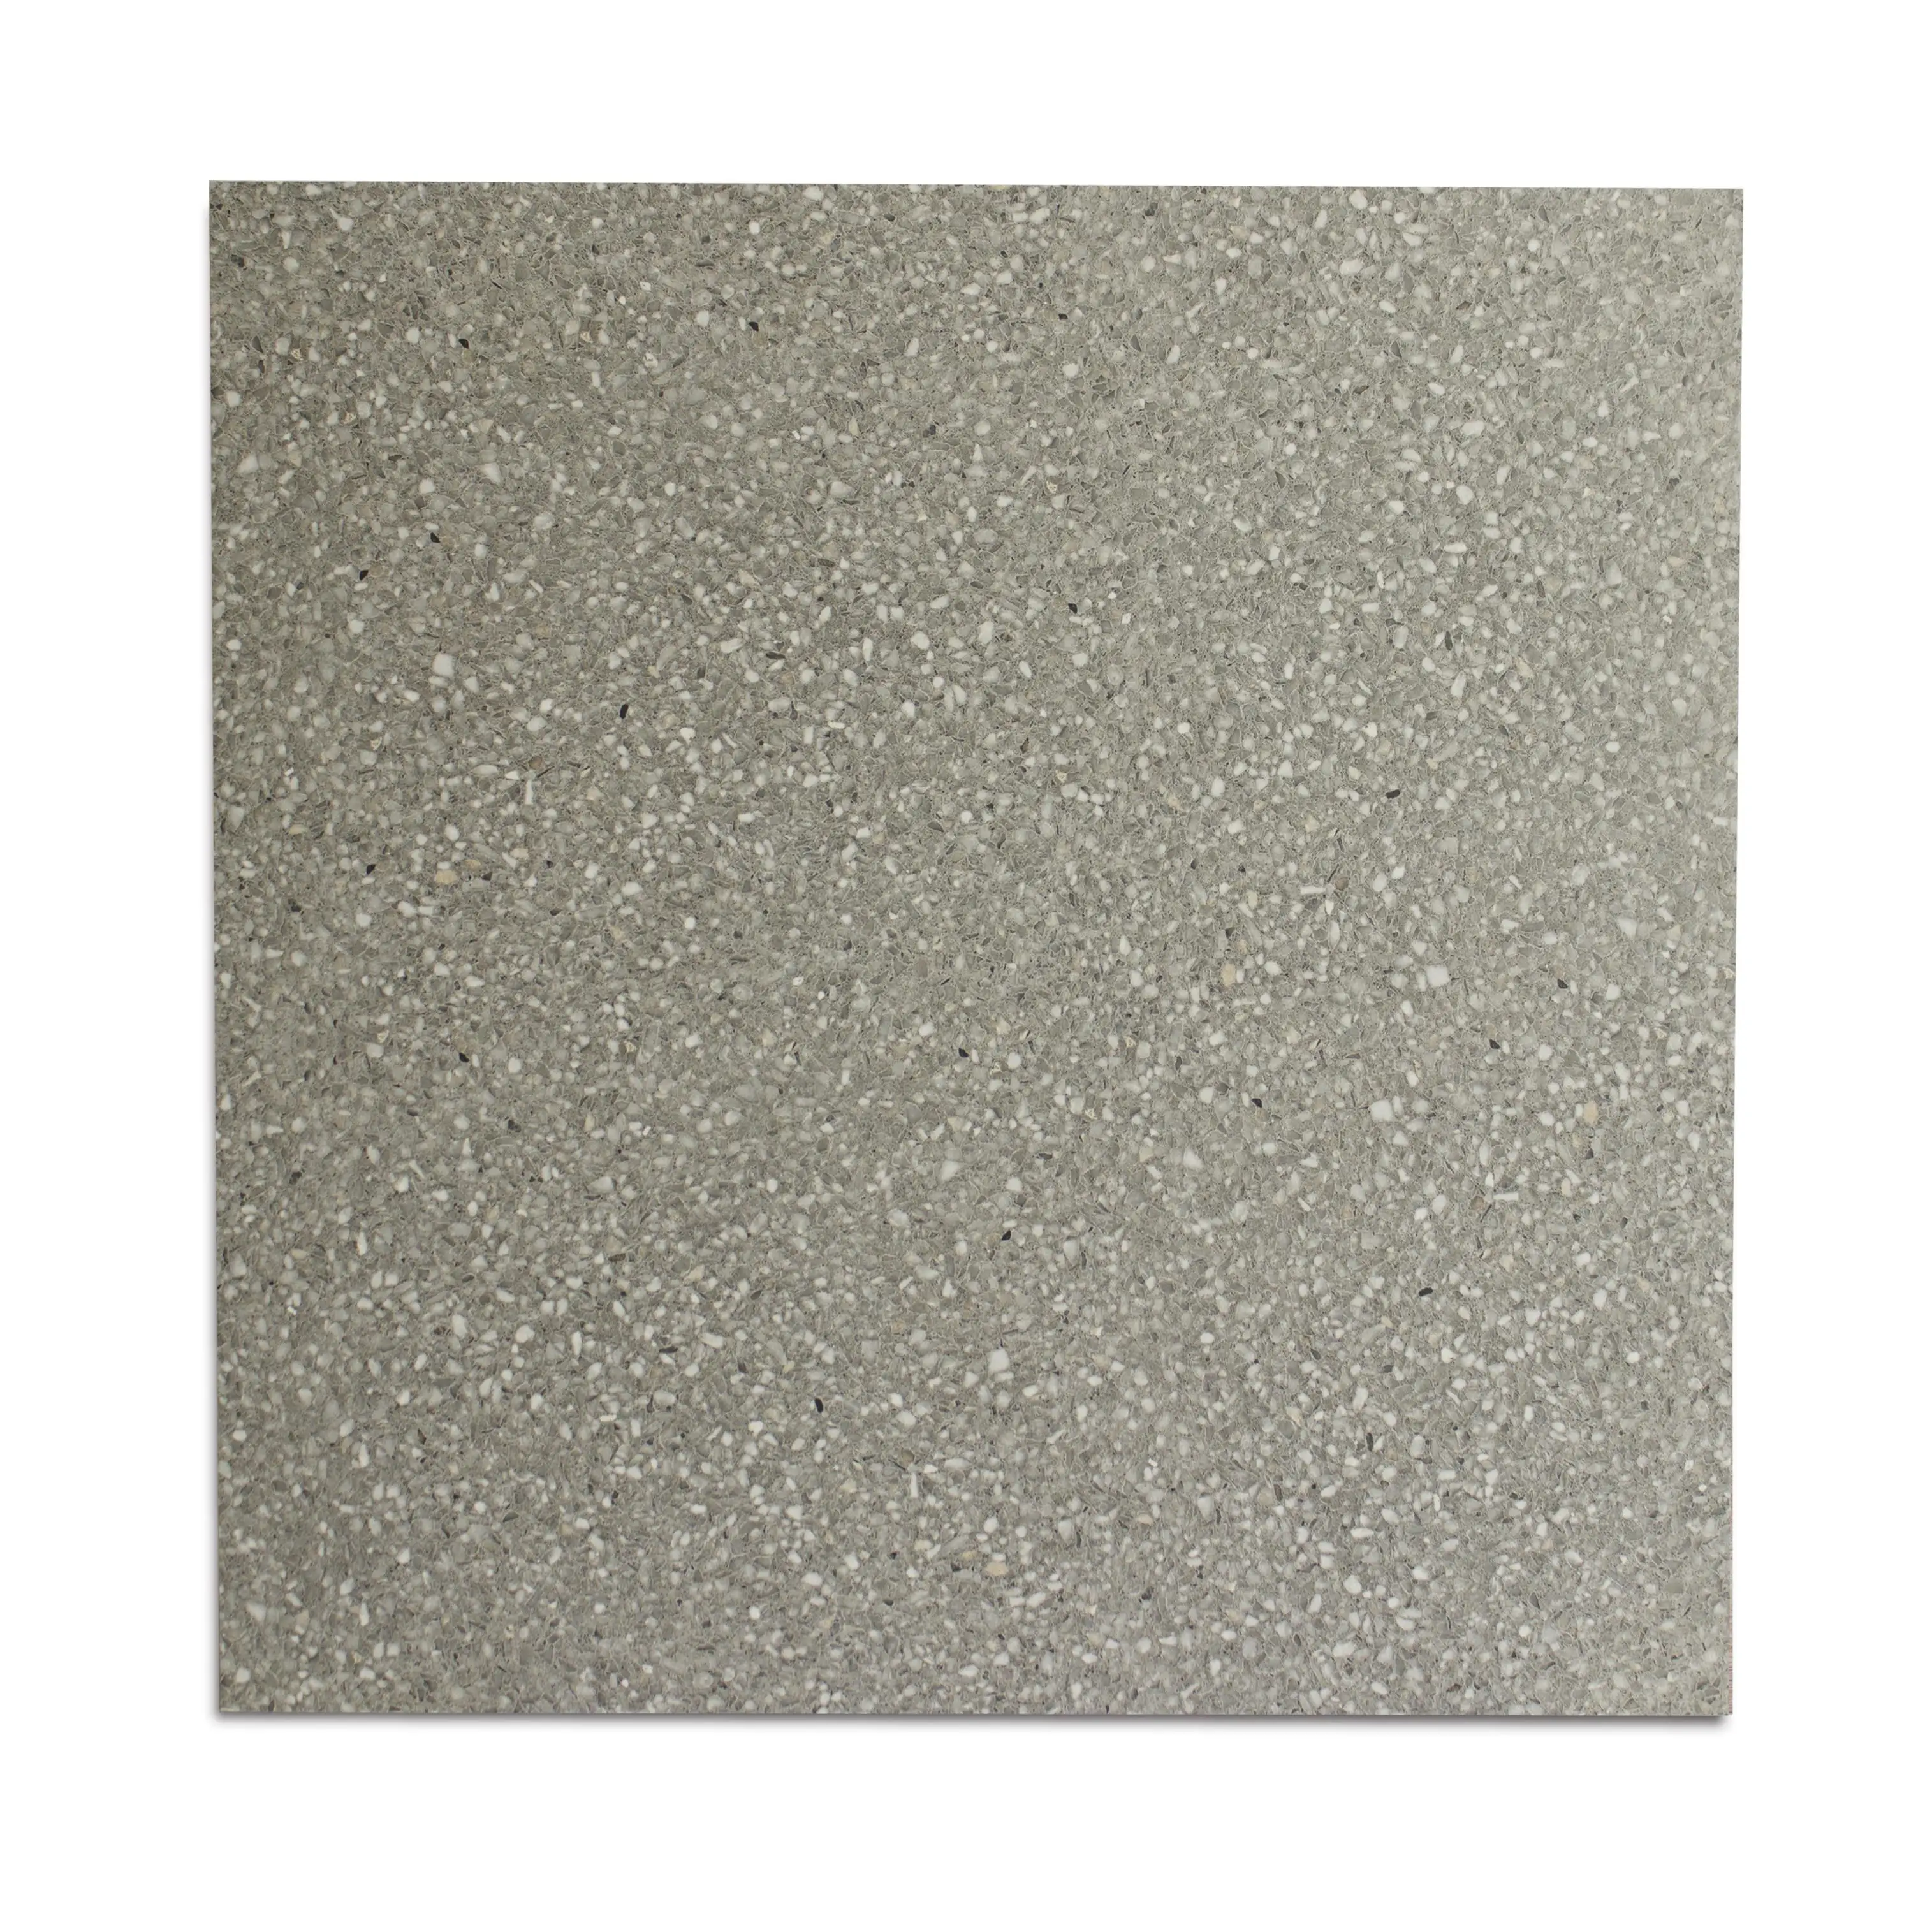 600x600mm Matte French Carreaux Ceramic Marble Floor Tile Glazed